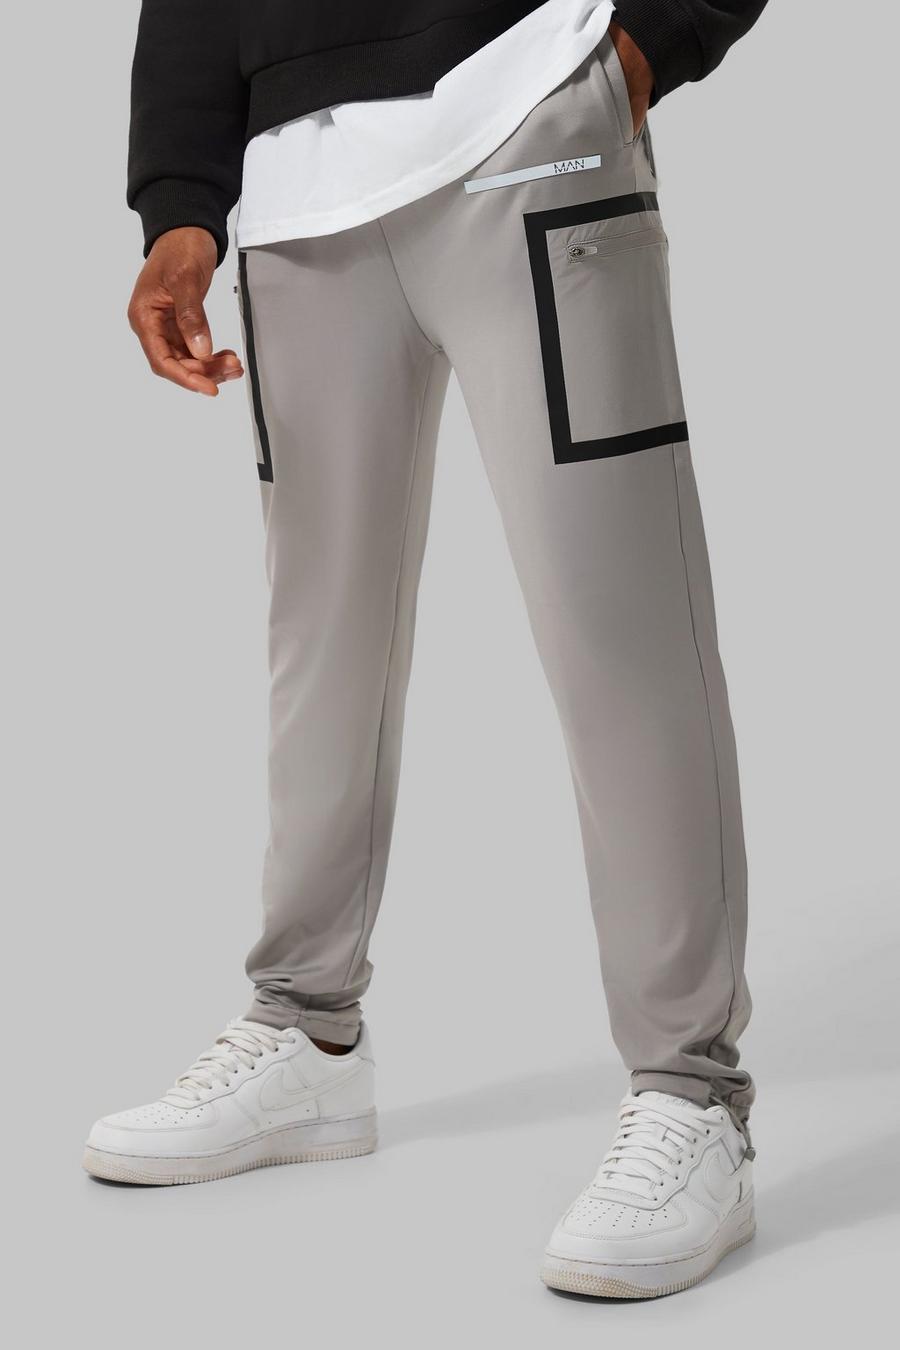 Pantaloni tuta Cargo Man Active per alta performance, Grey grigio